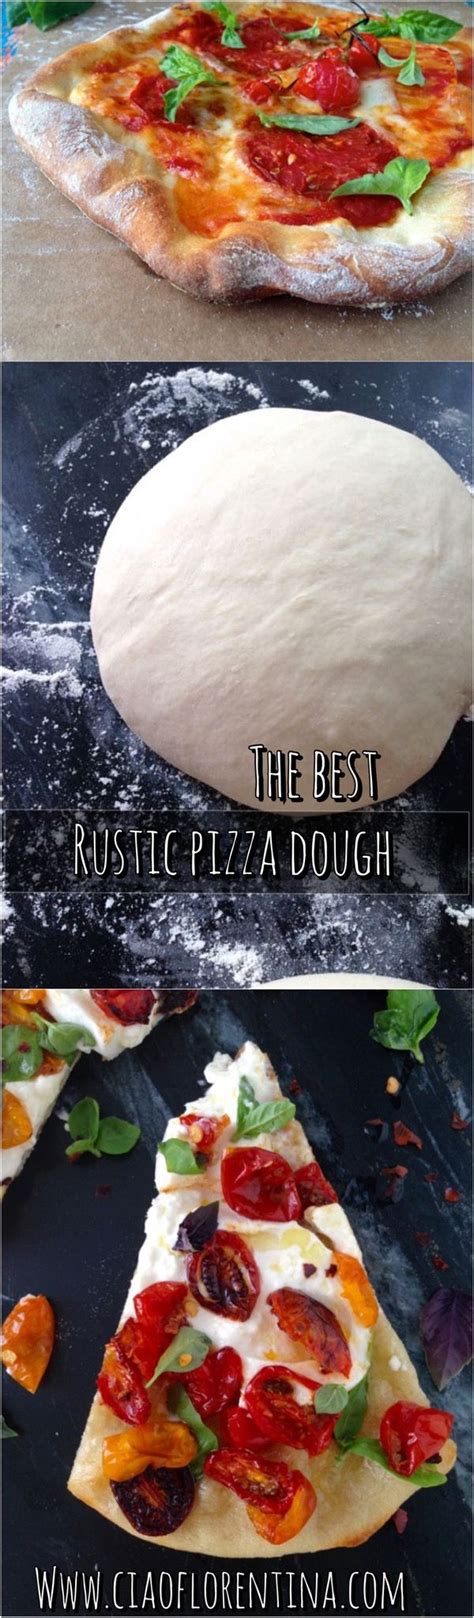 Rustic Italian Pizza Dough Recipe Video • Ciaoflorentina Recipe